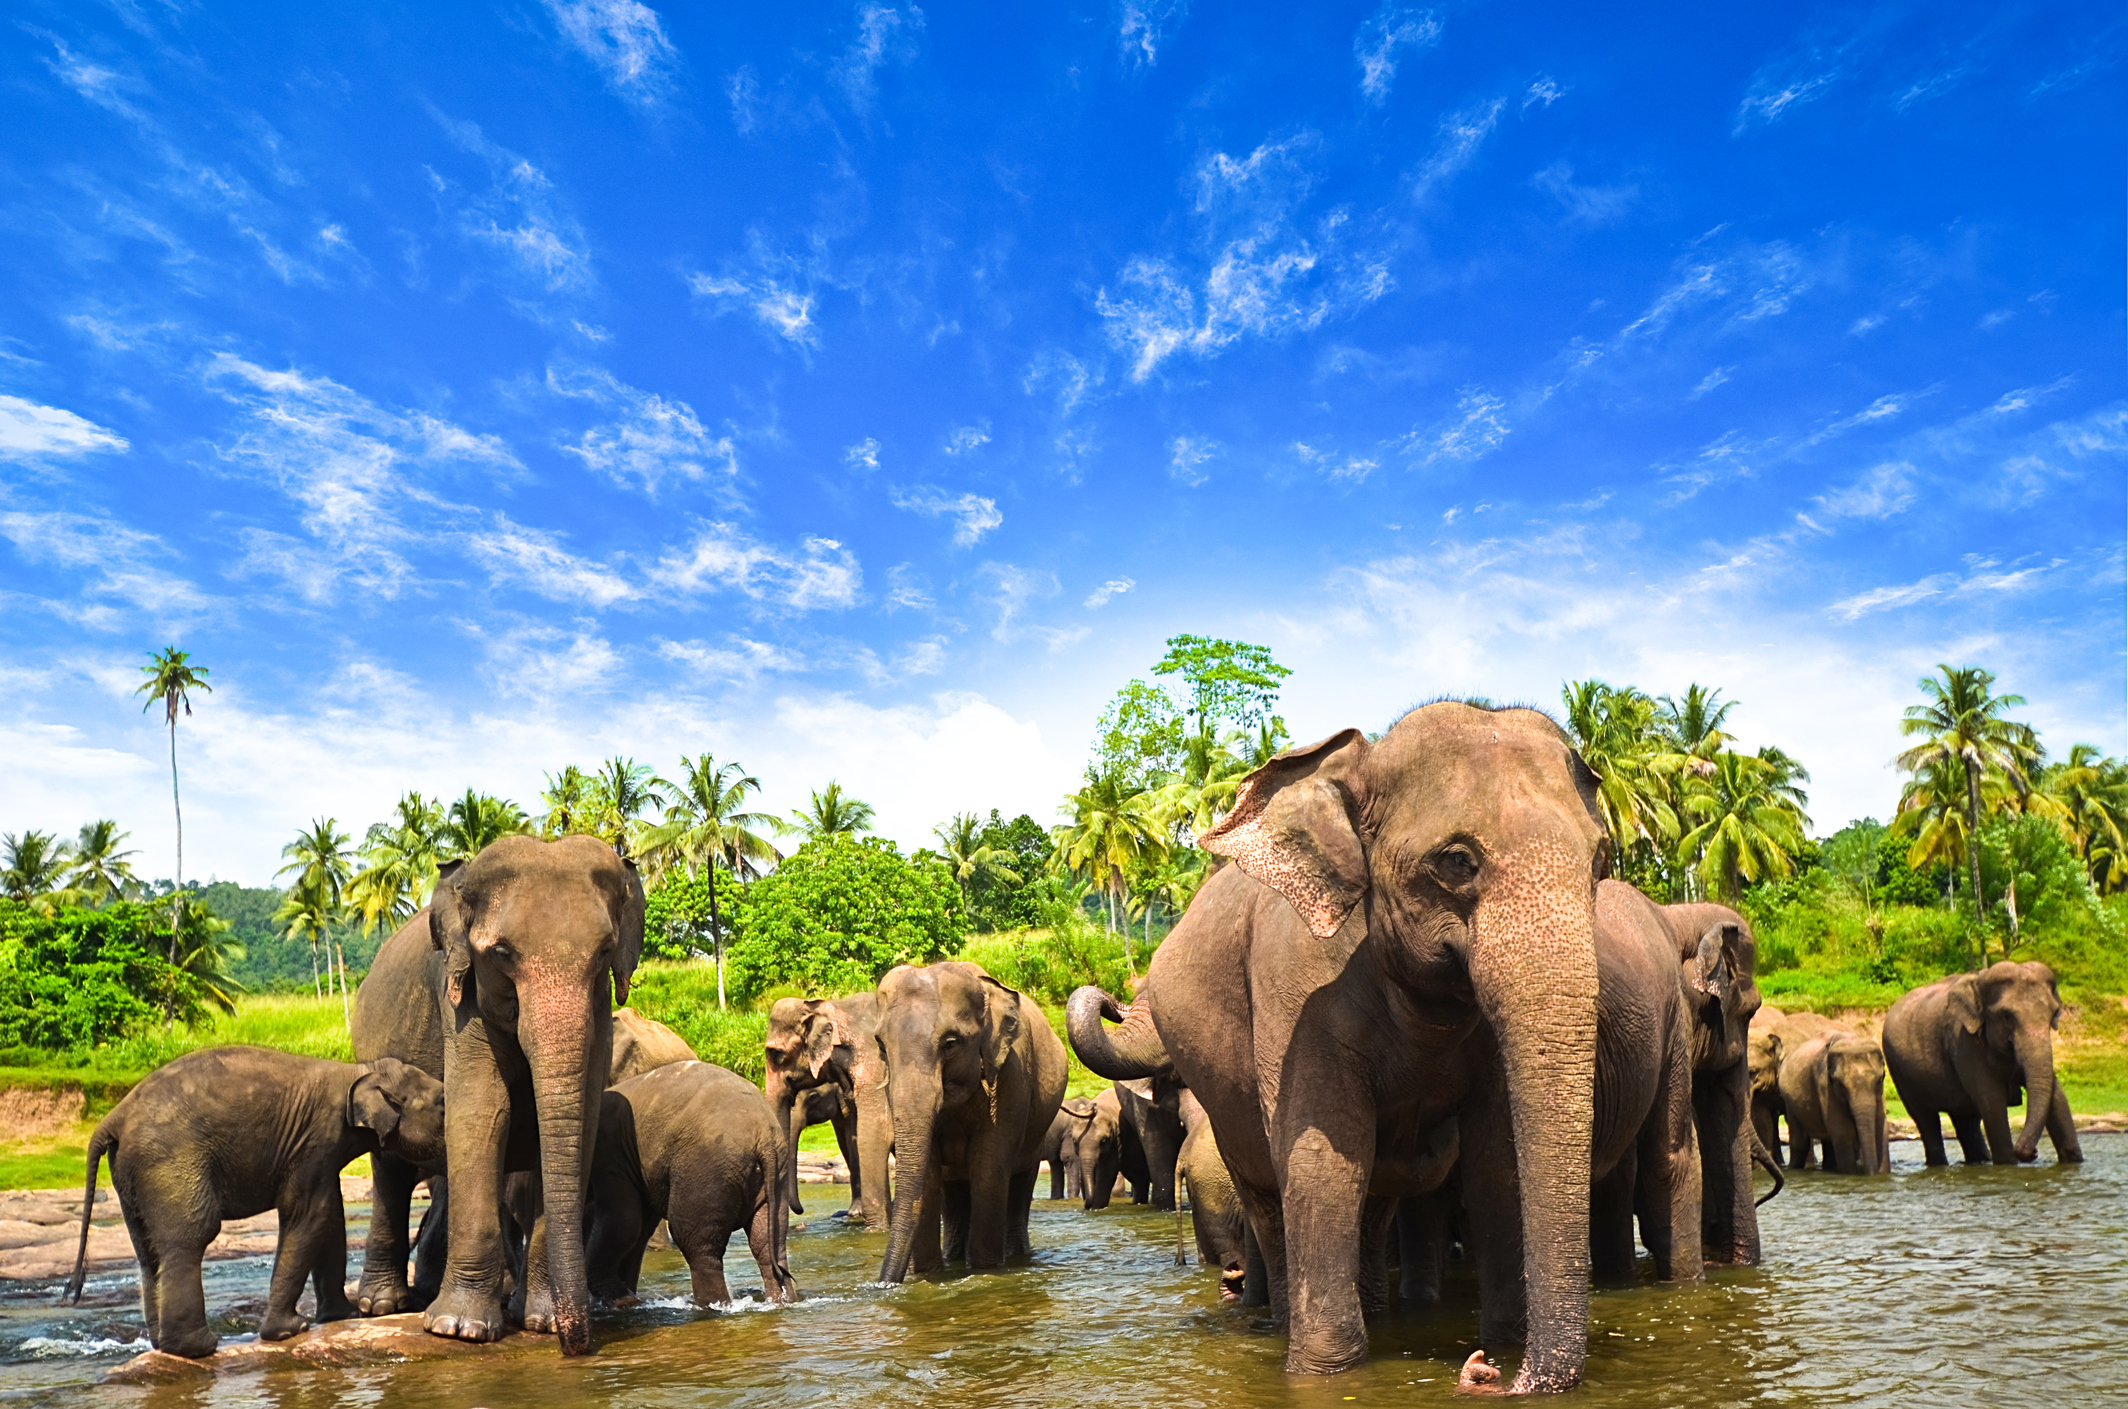 Elephants in the beautiful landscape of Sri Lanka (Getty Images)